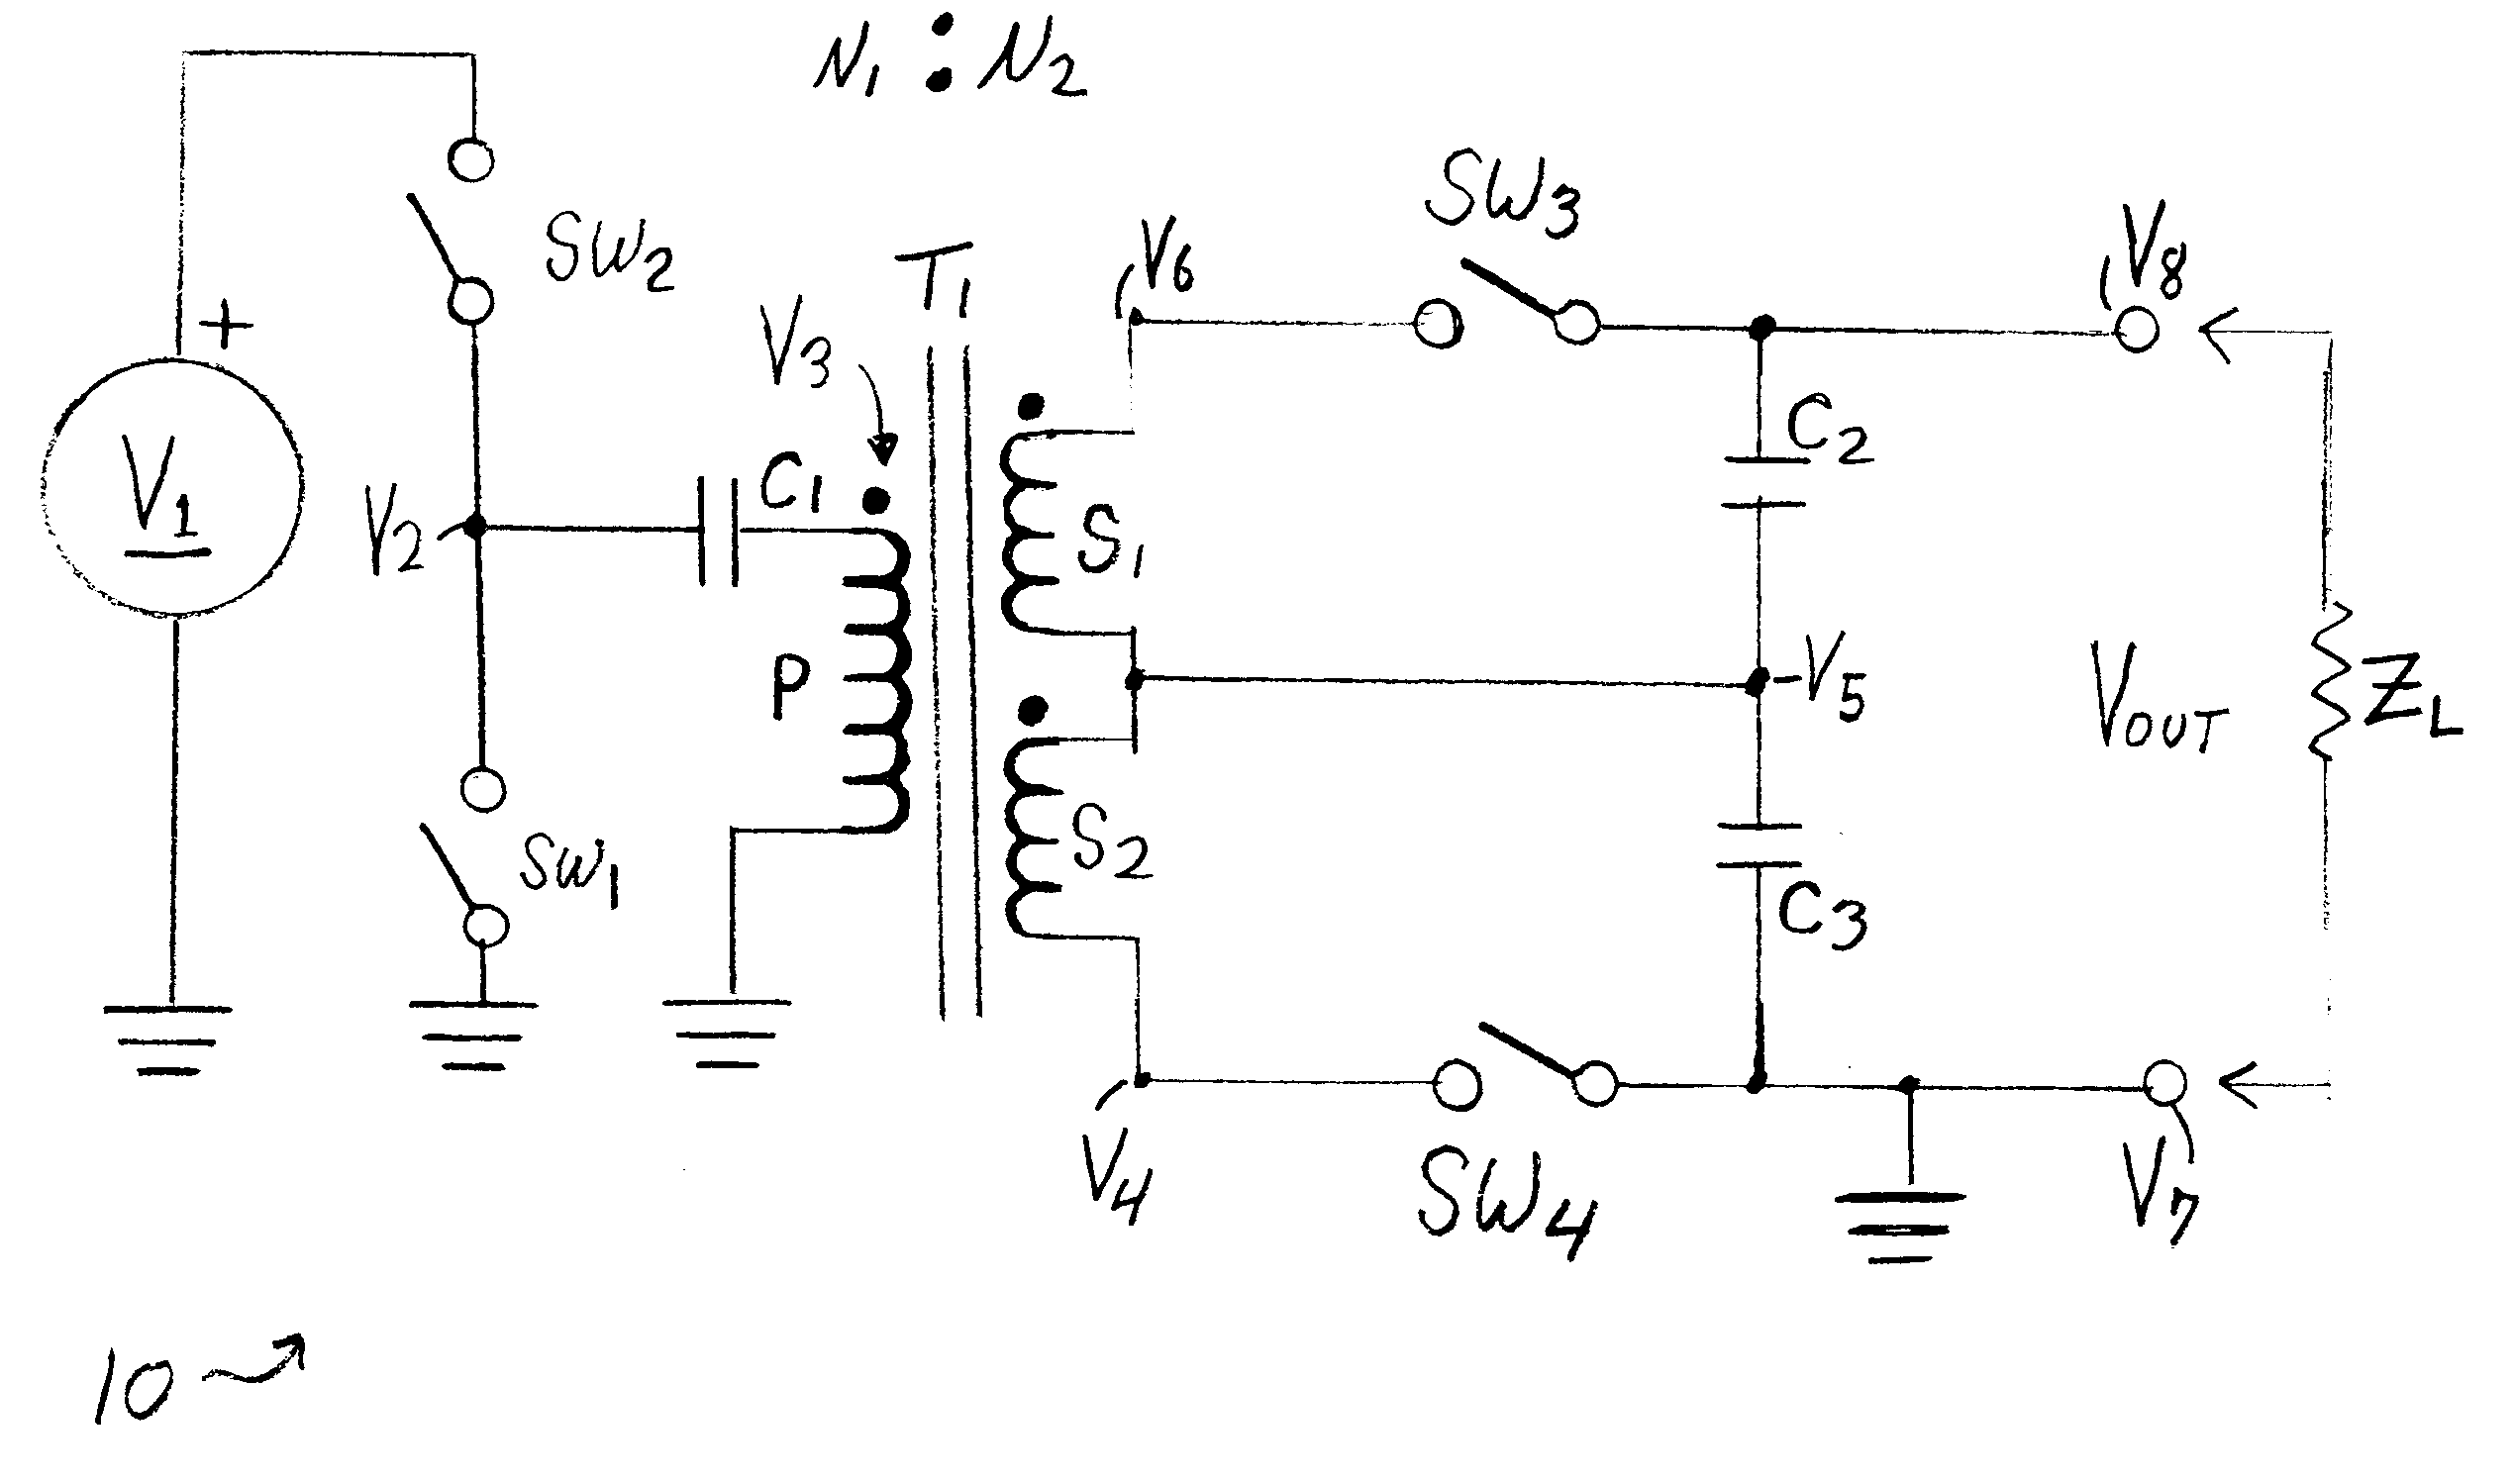 DC power converter having bipolar output and bi-directional reactive current transfer